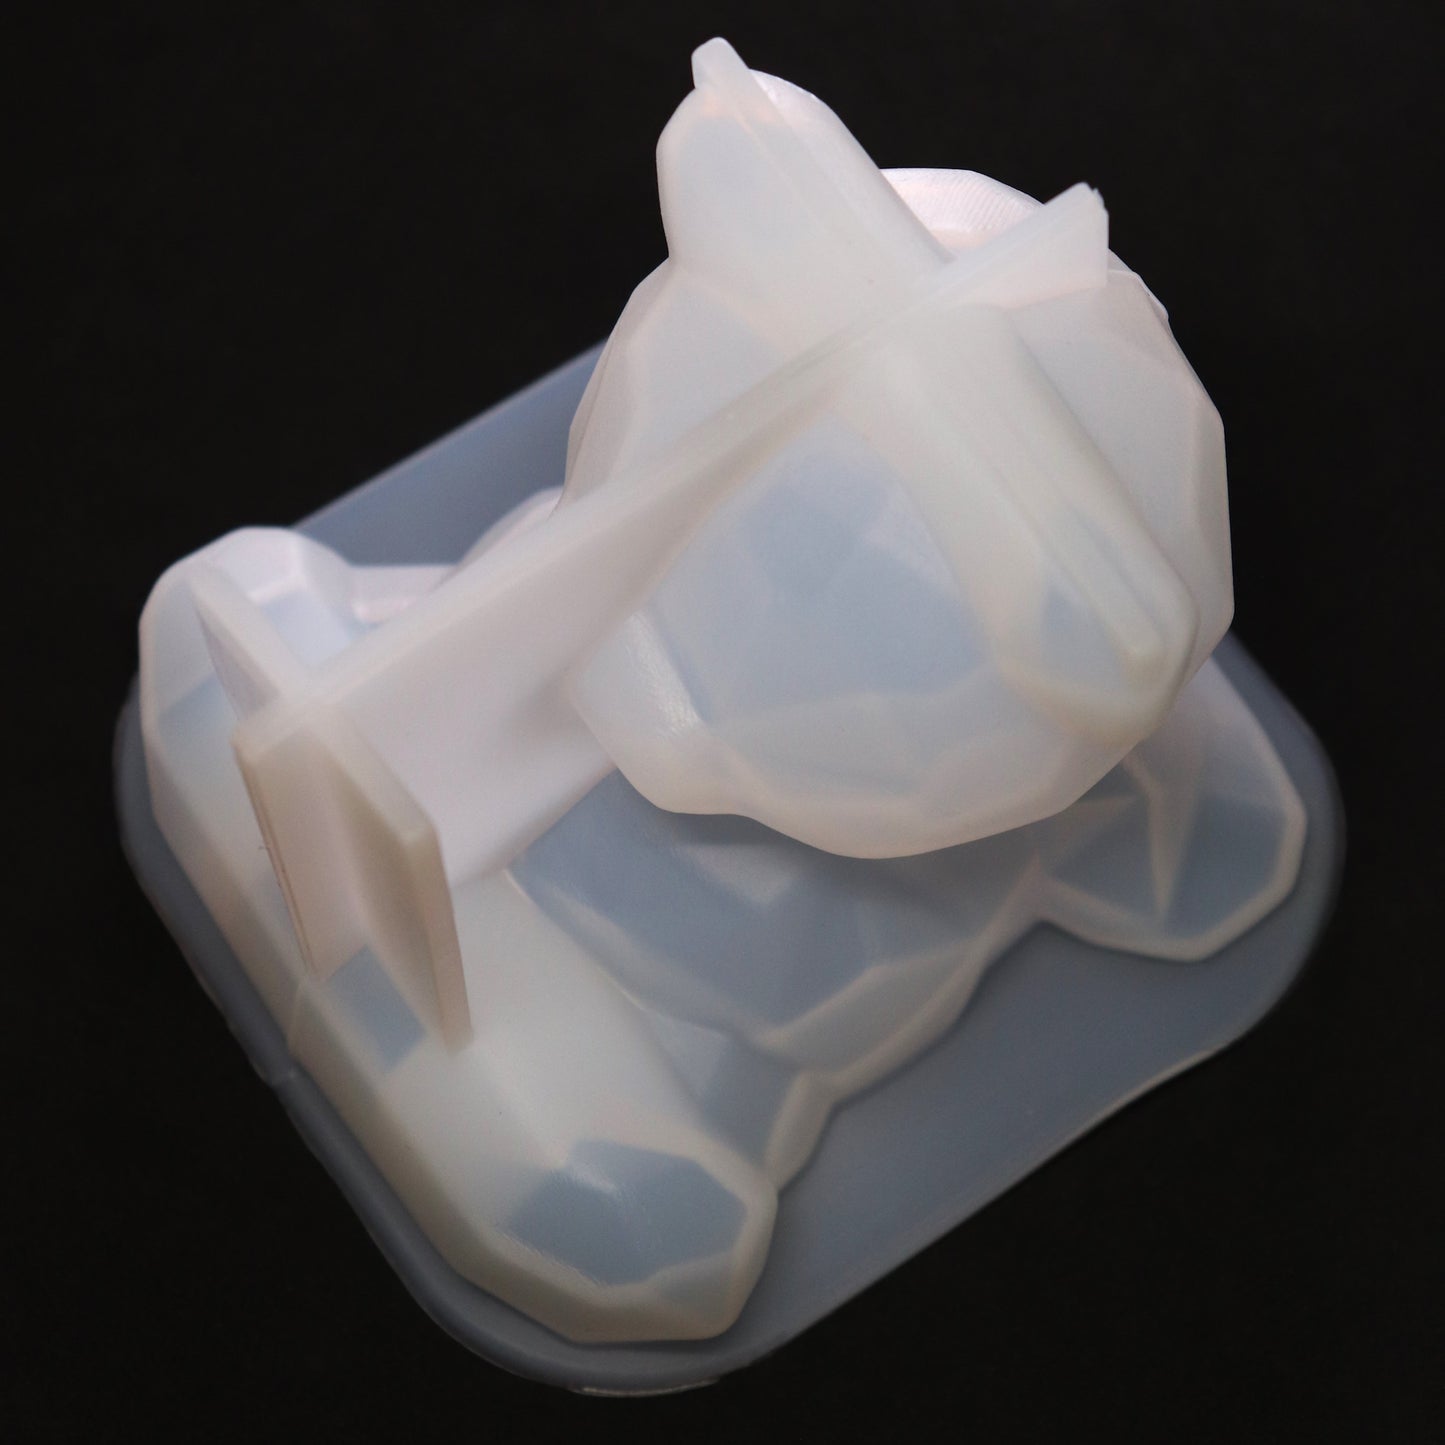 Silikonform 3D Teddybär Bär Gießform für Resin, Raysin ca. 9 cm